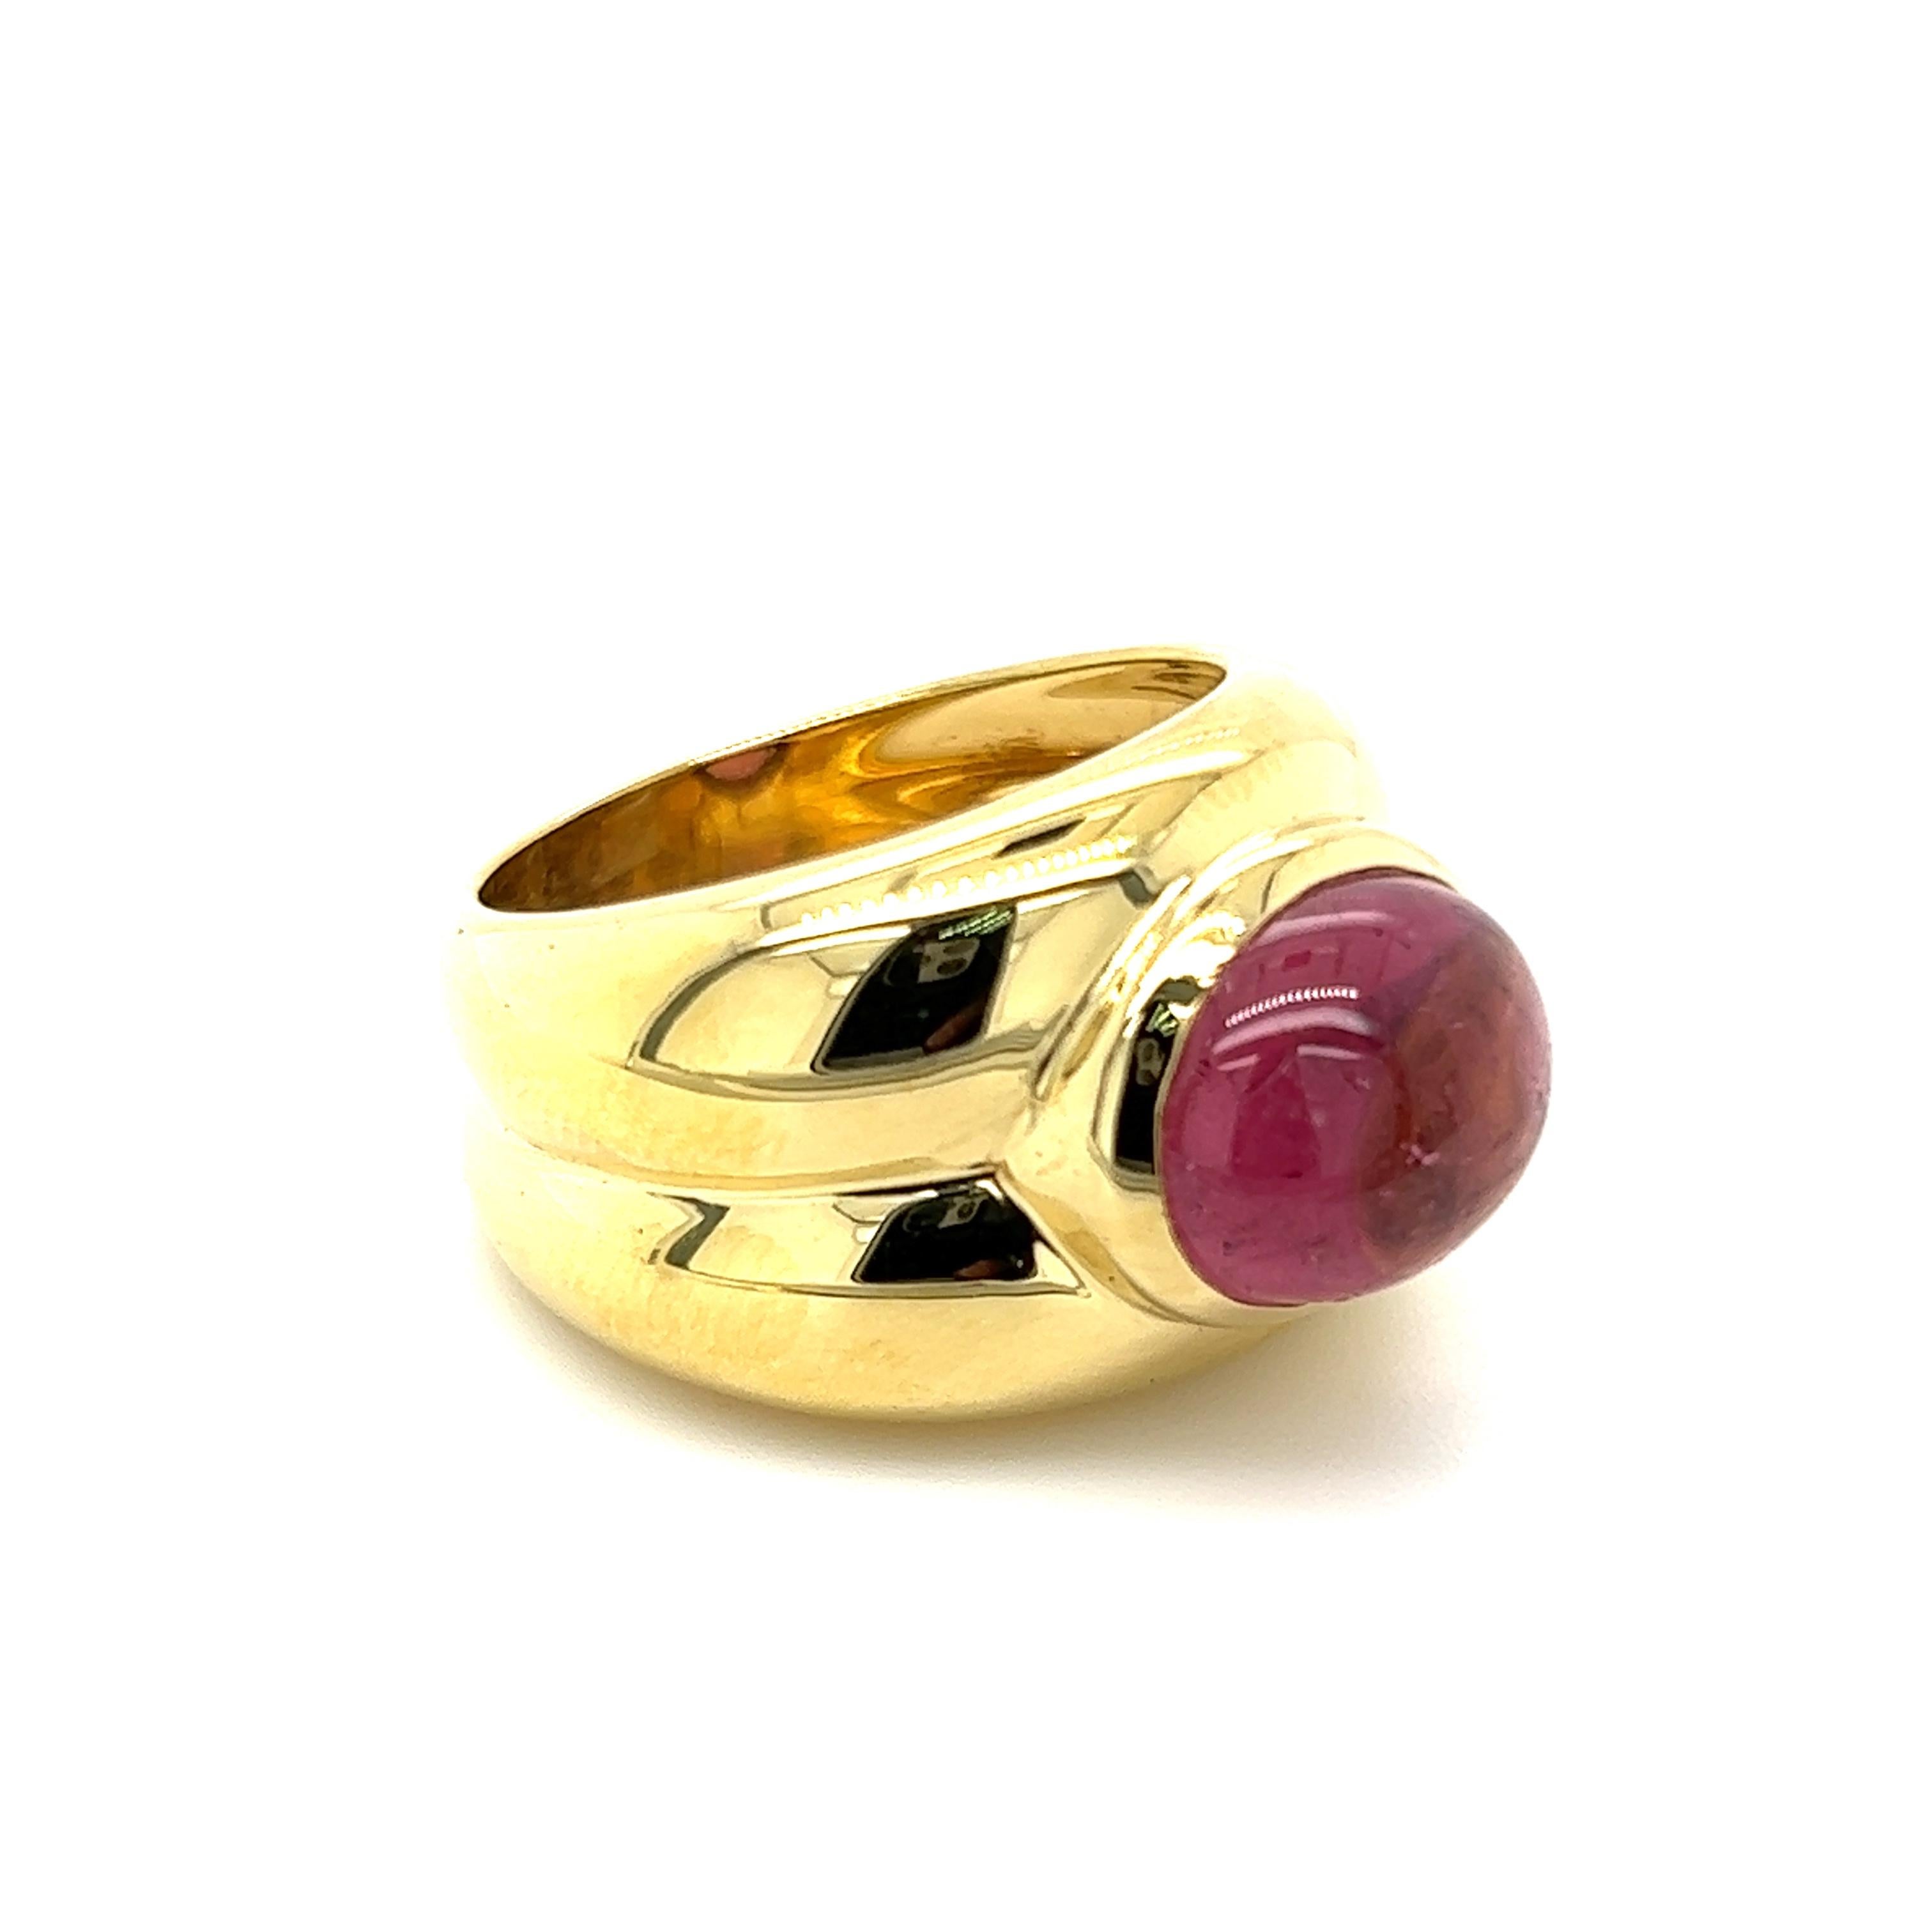 Tiffany & Co. Pinkish- Red Rubellite Tourmaline Ring

Details:
1- Pink Rubellite Tourmaline Cabochon- 12mm x 10mm
18kt Yellow Gold